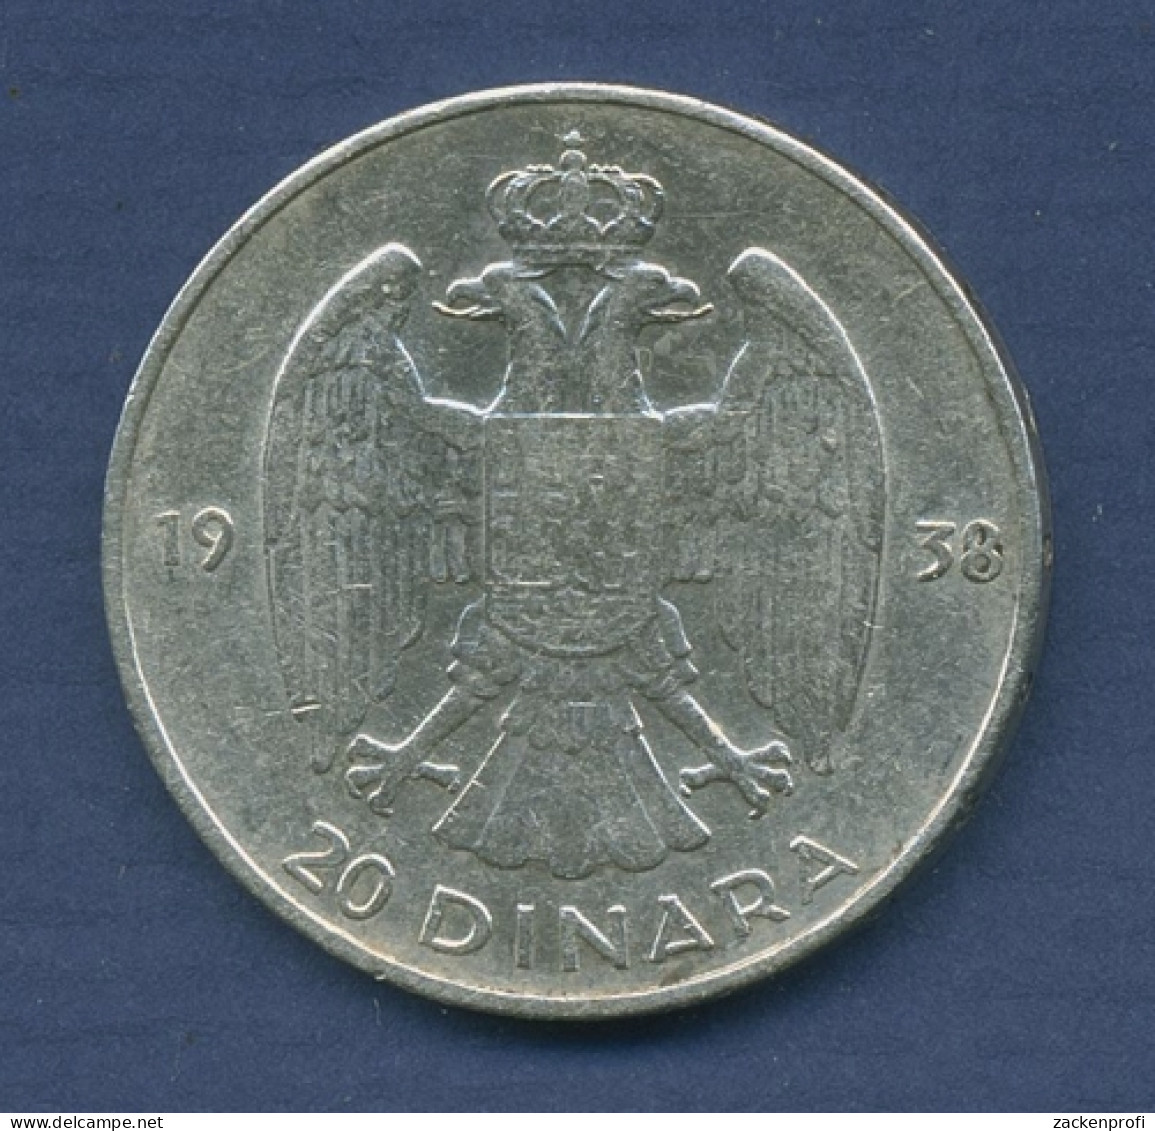 Jugoslawien 20 Dinara 1938, Silber, Petar II., KM 23 Ss (m2552) - Yugoslavia